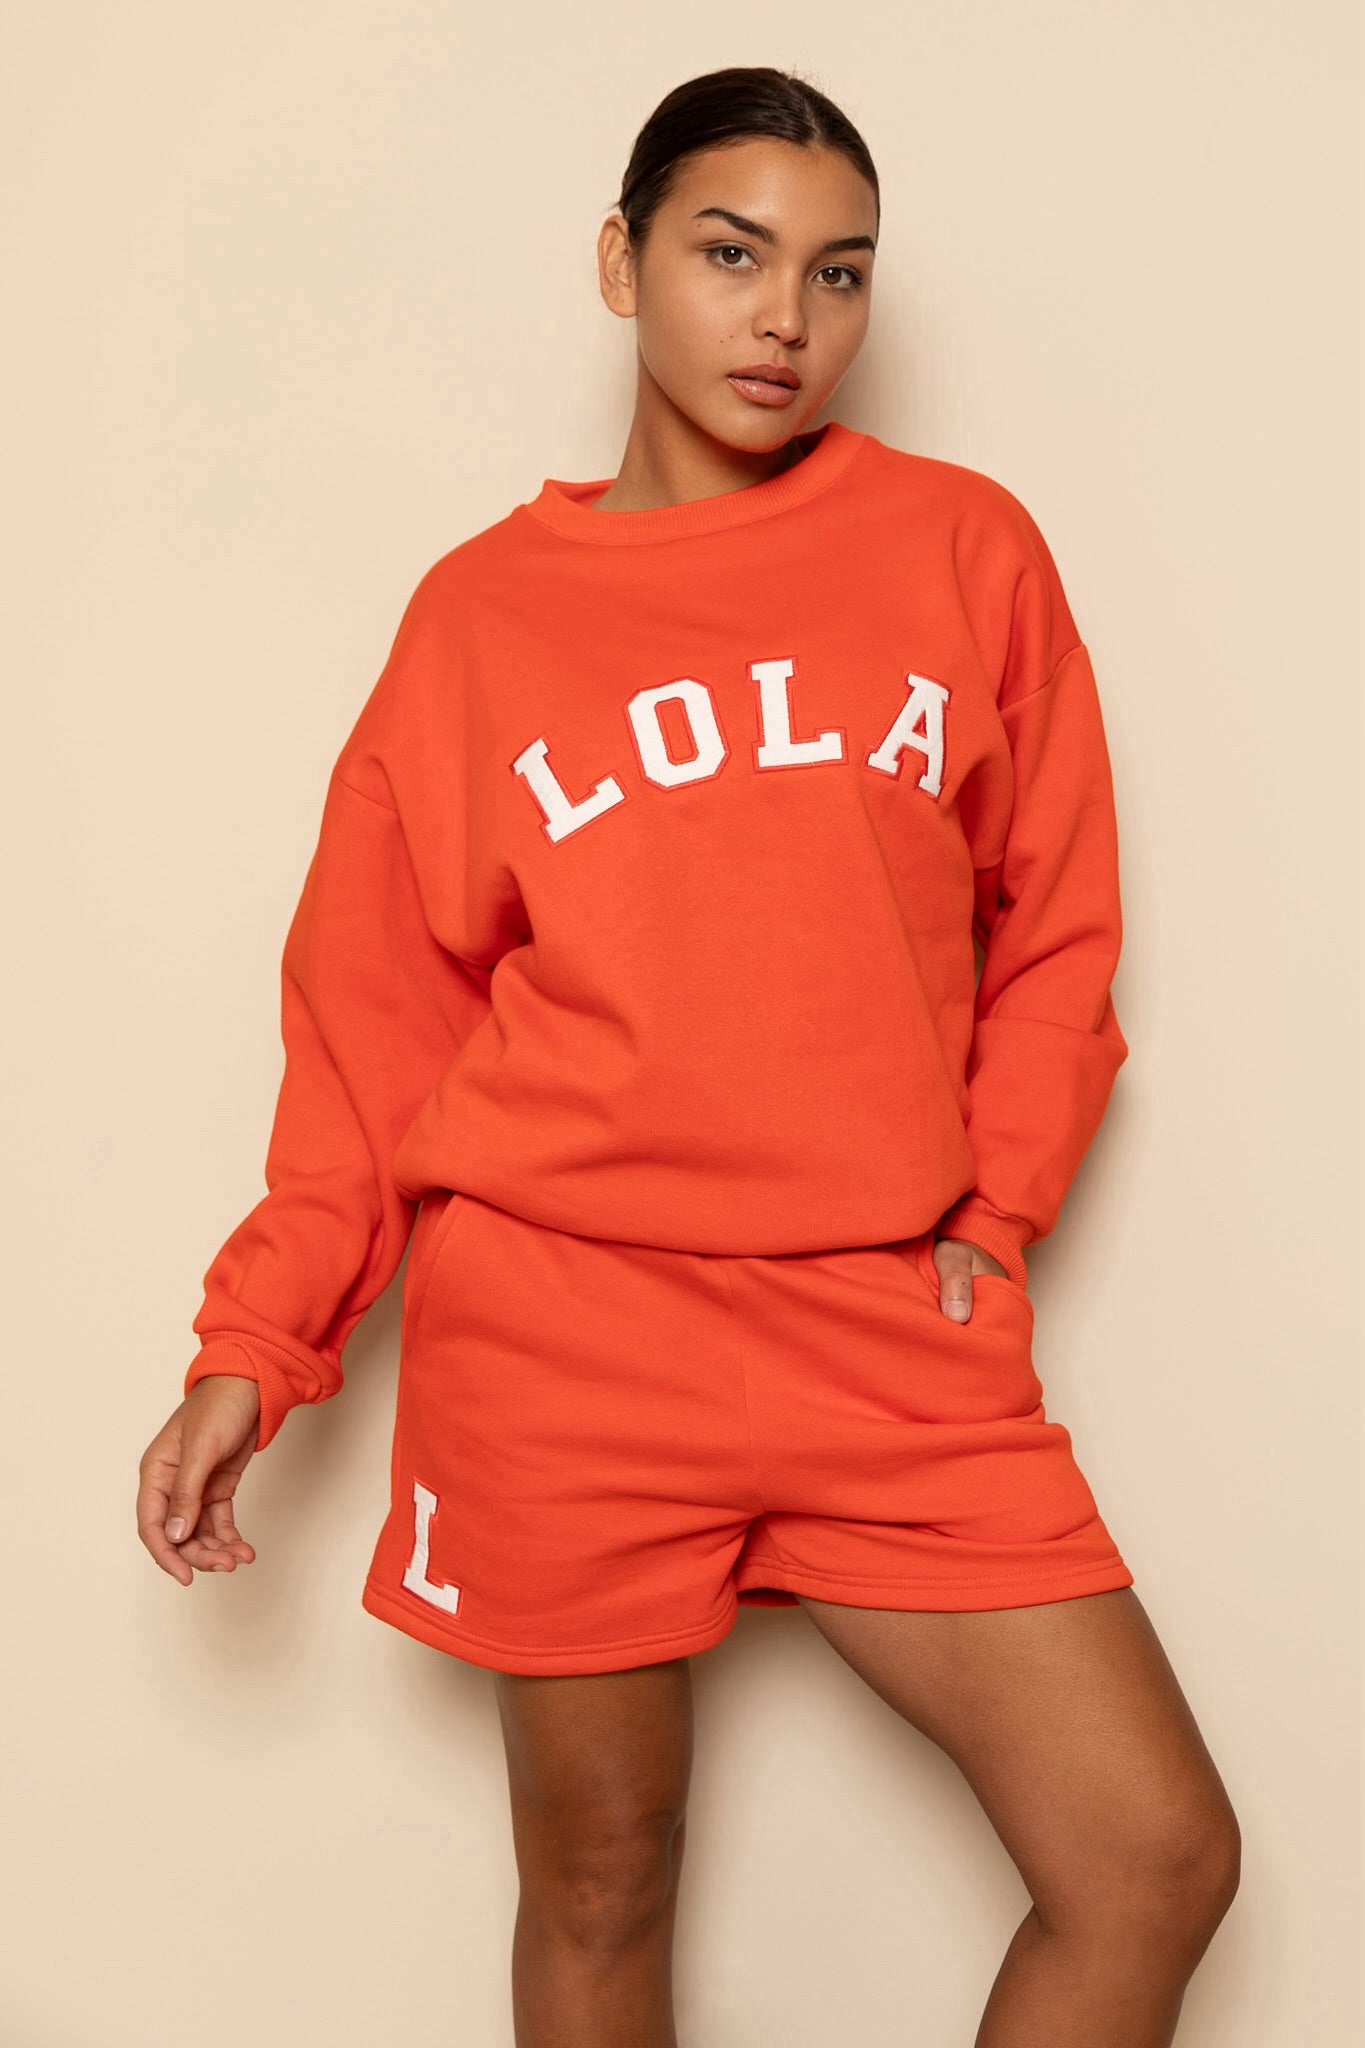 Milla Orange Sweater